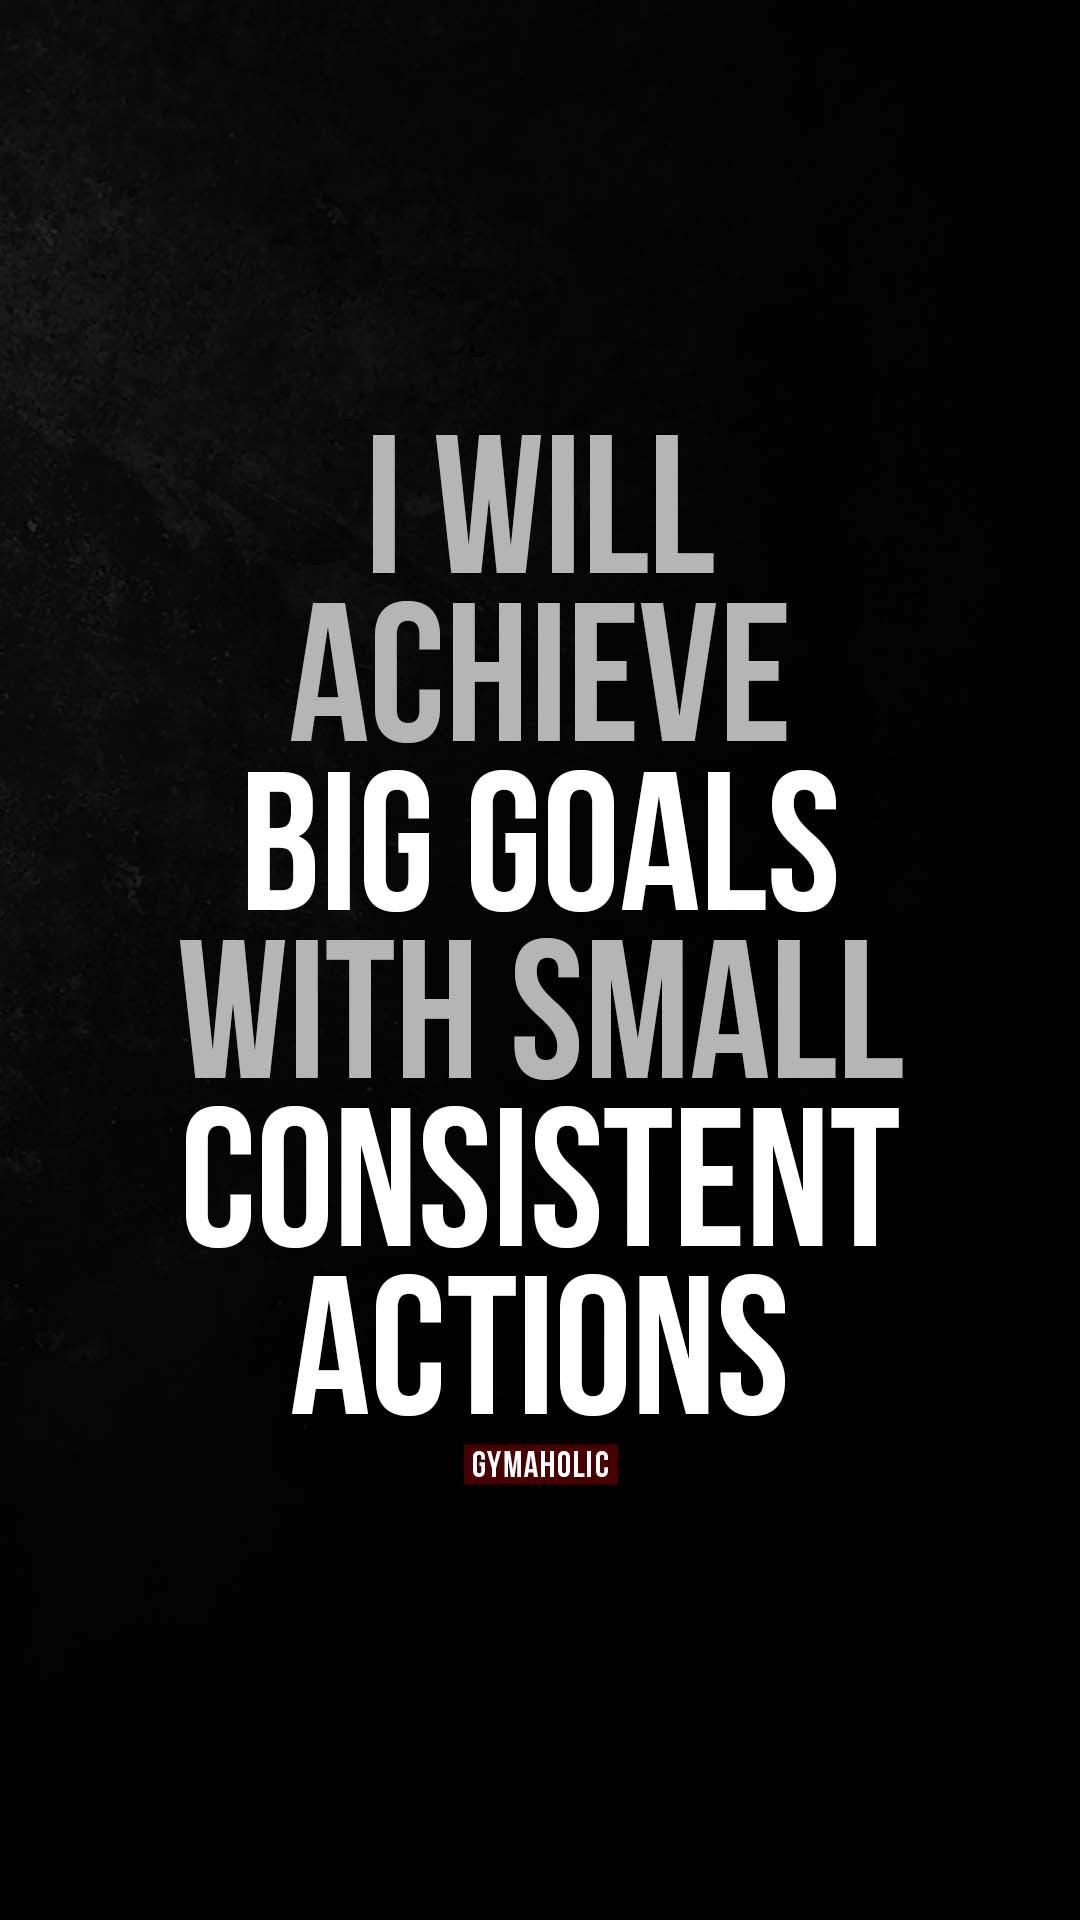 I will achieve big goals